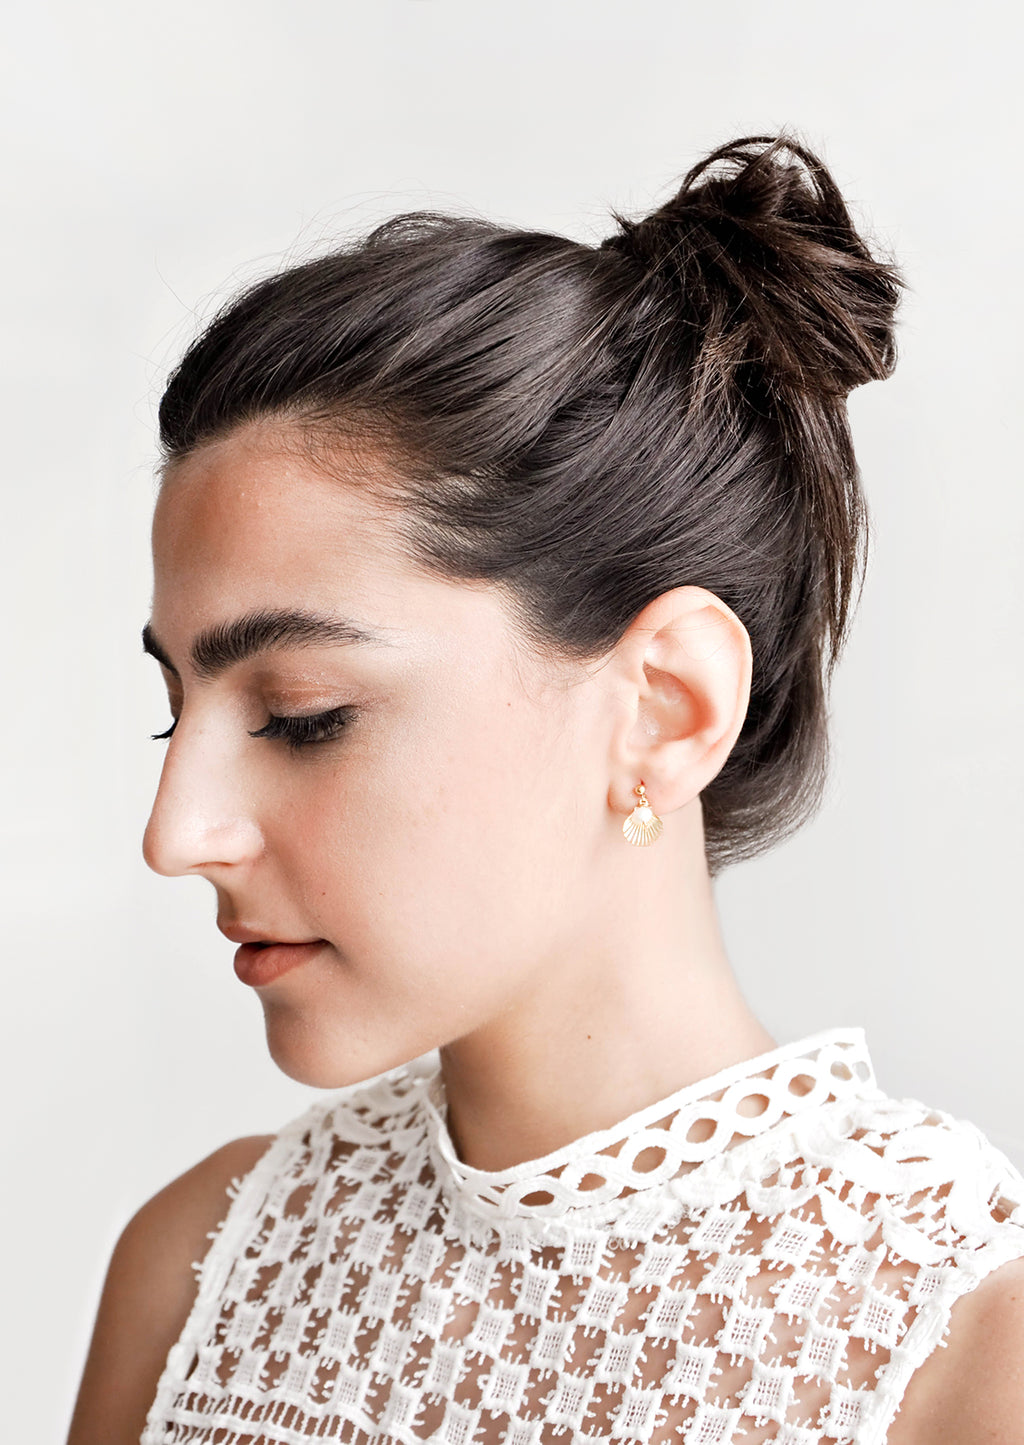 3: Model shot showing woman wearing earrings and white top.